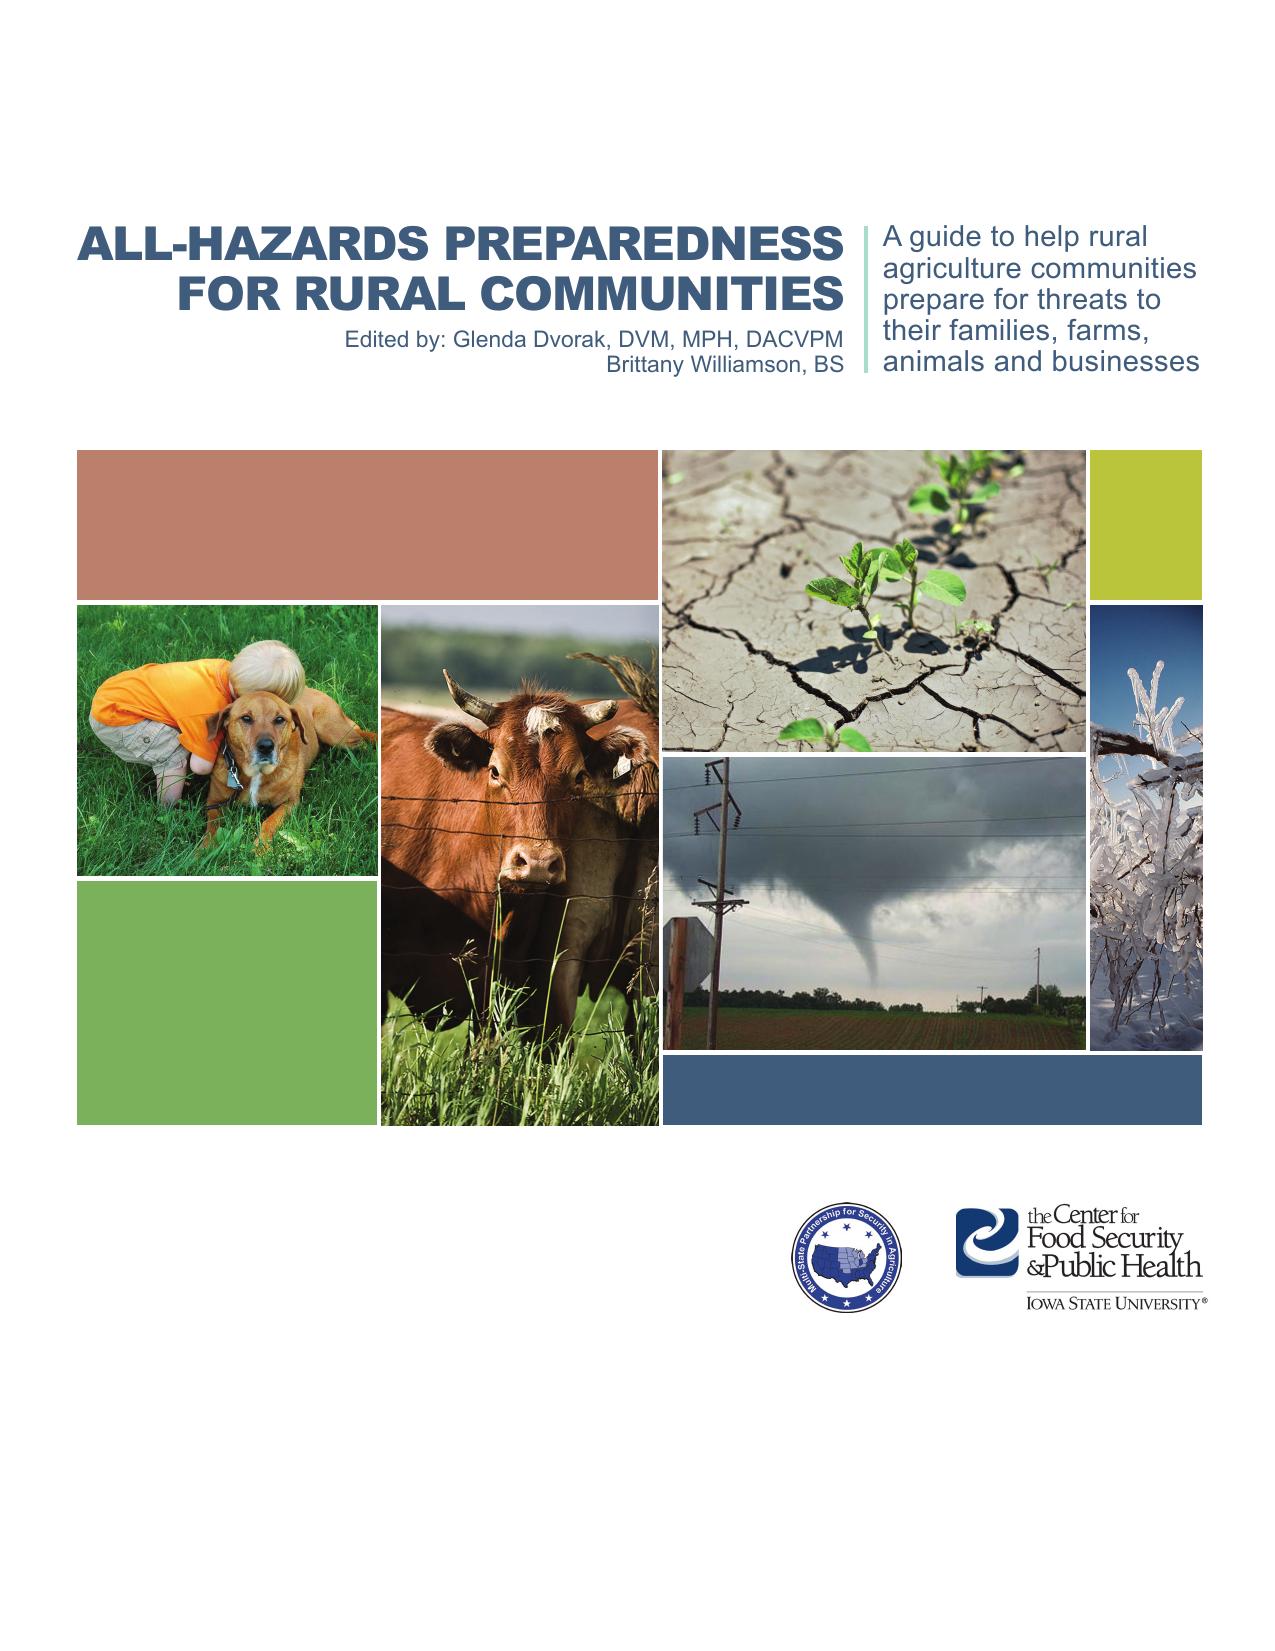 All-Hazards Preparedness for Rural Communities